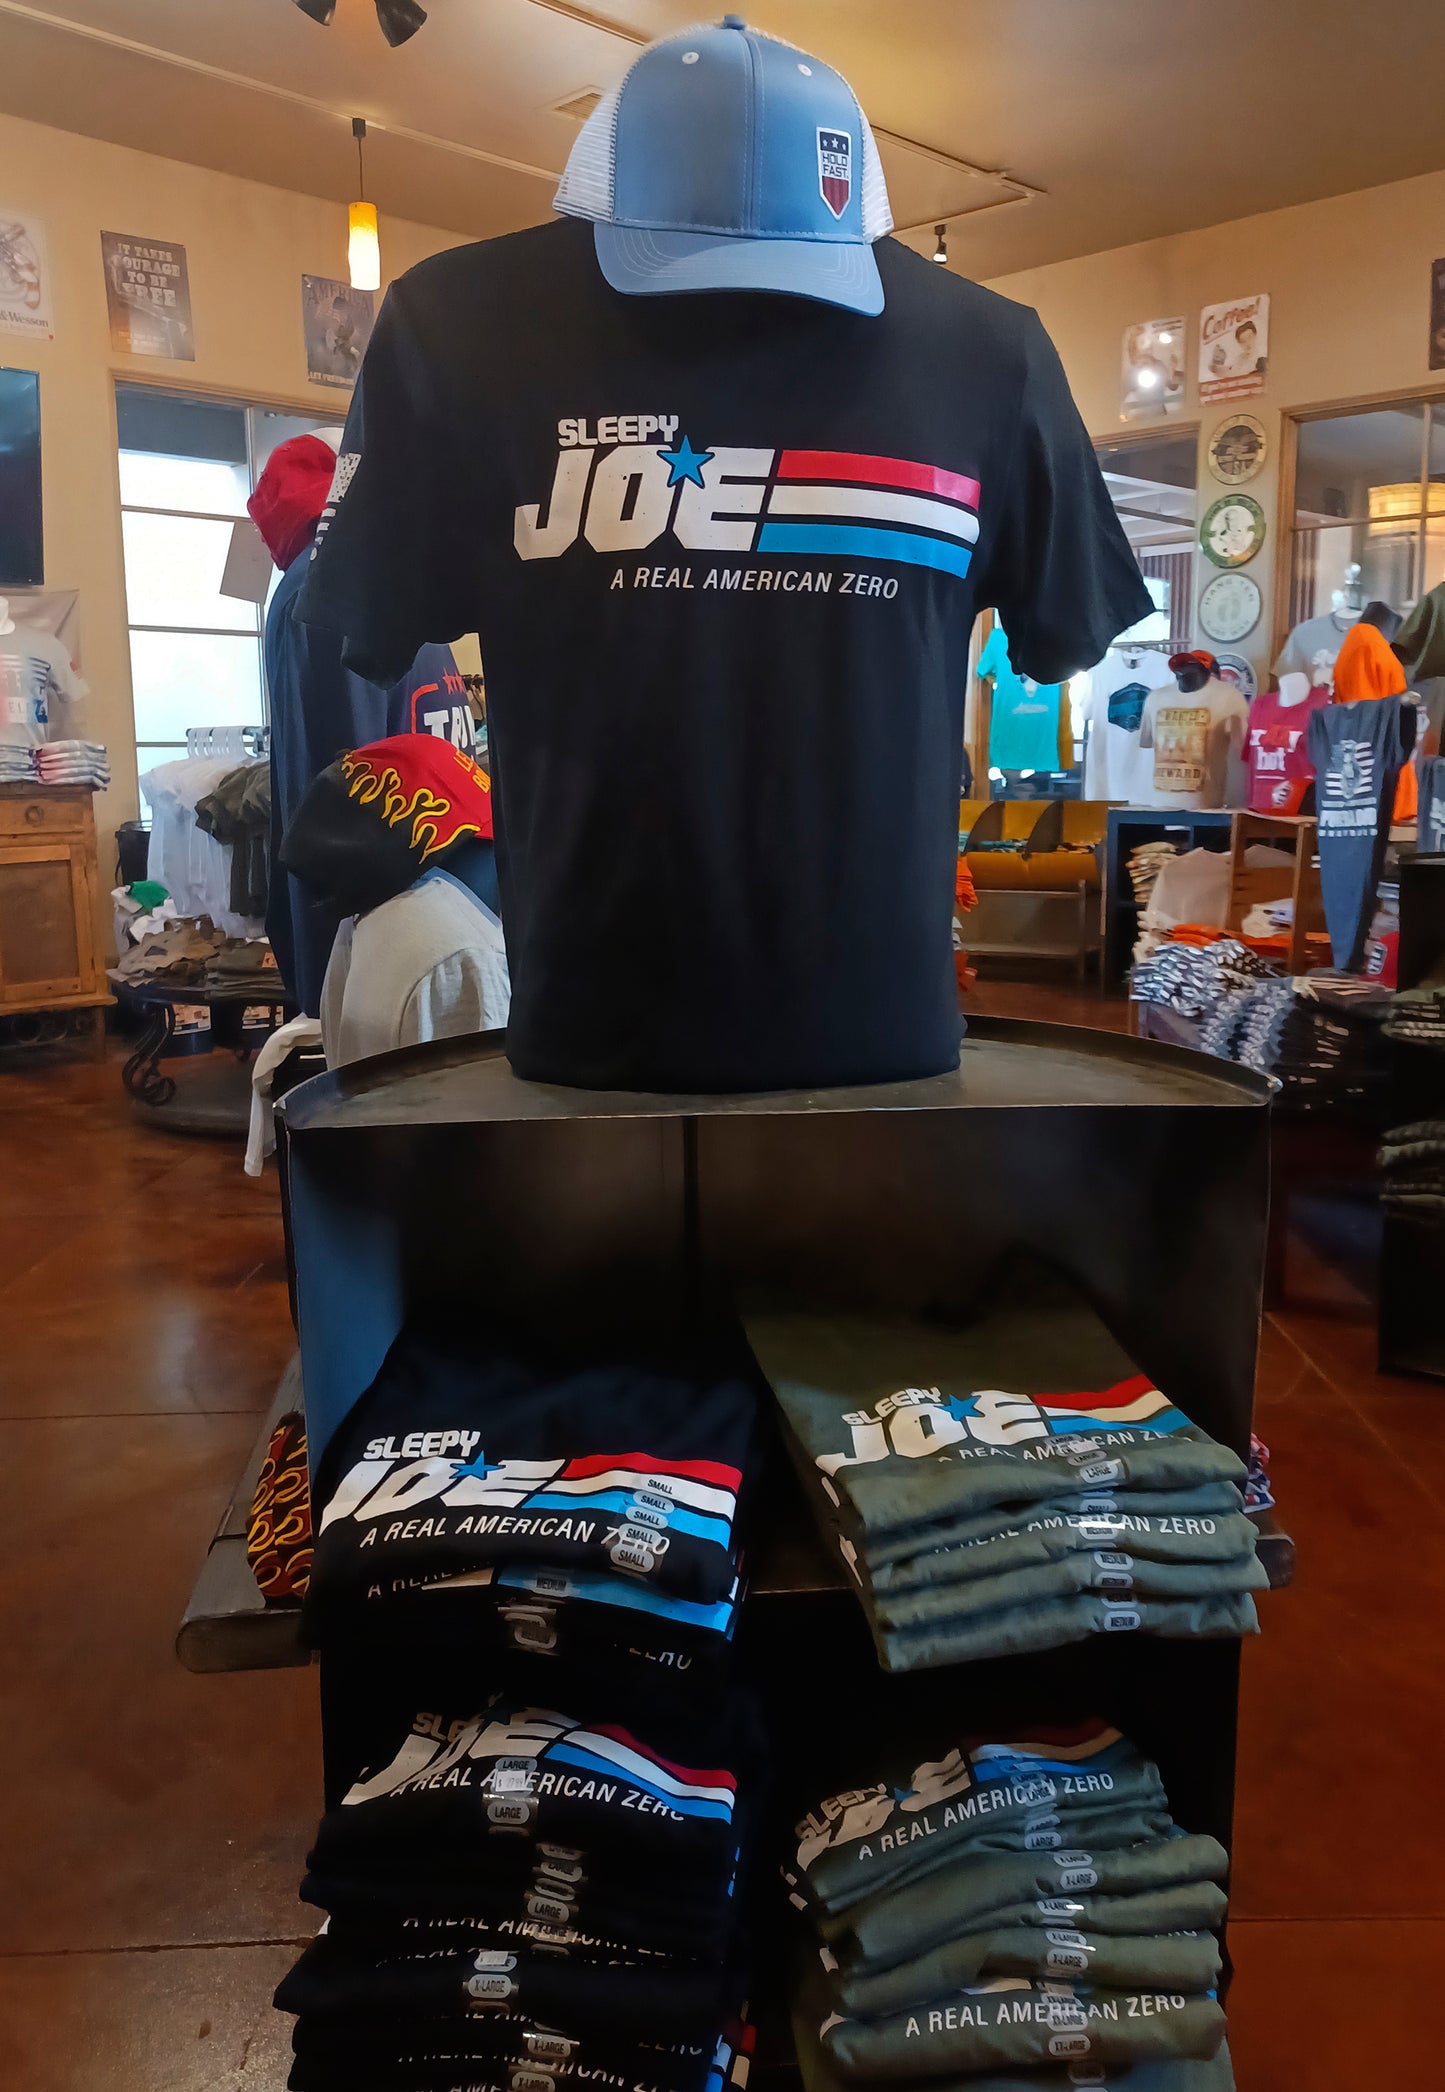 Sleepy Joe GI Joe t-shirt on display in retail store